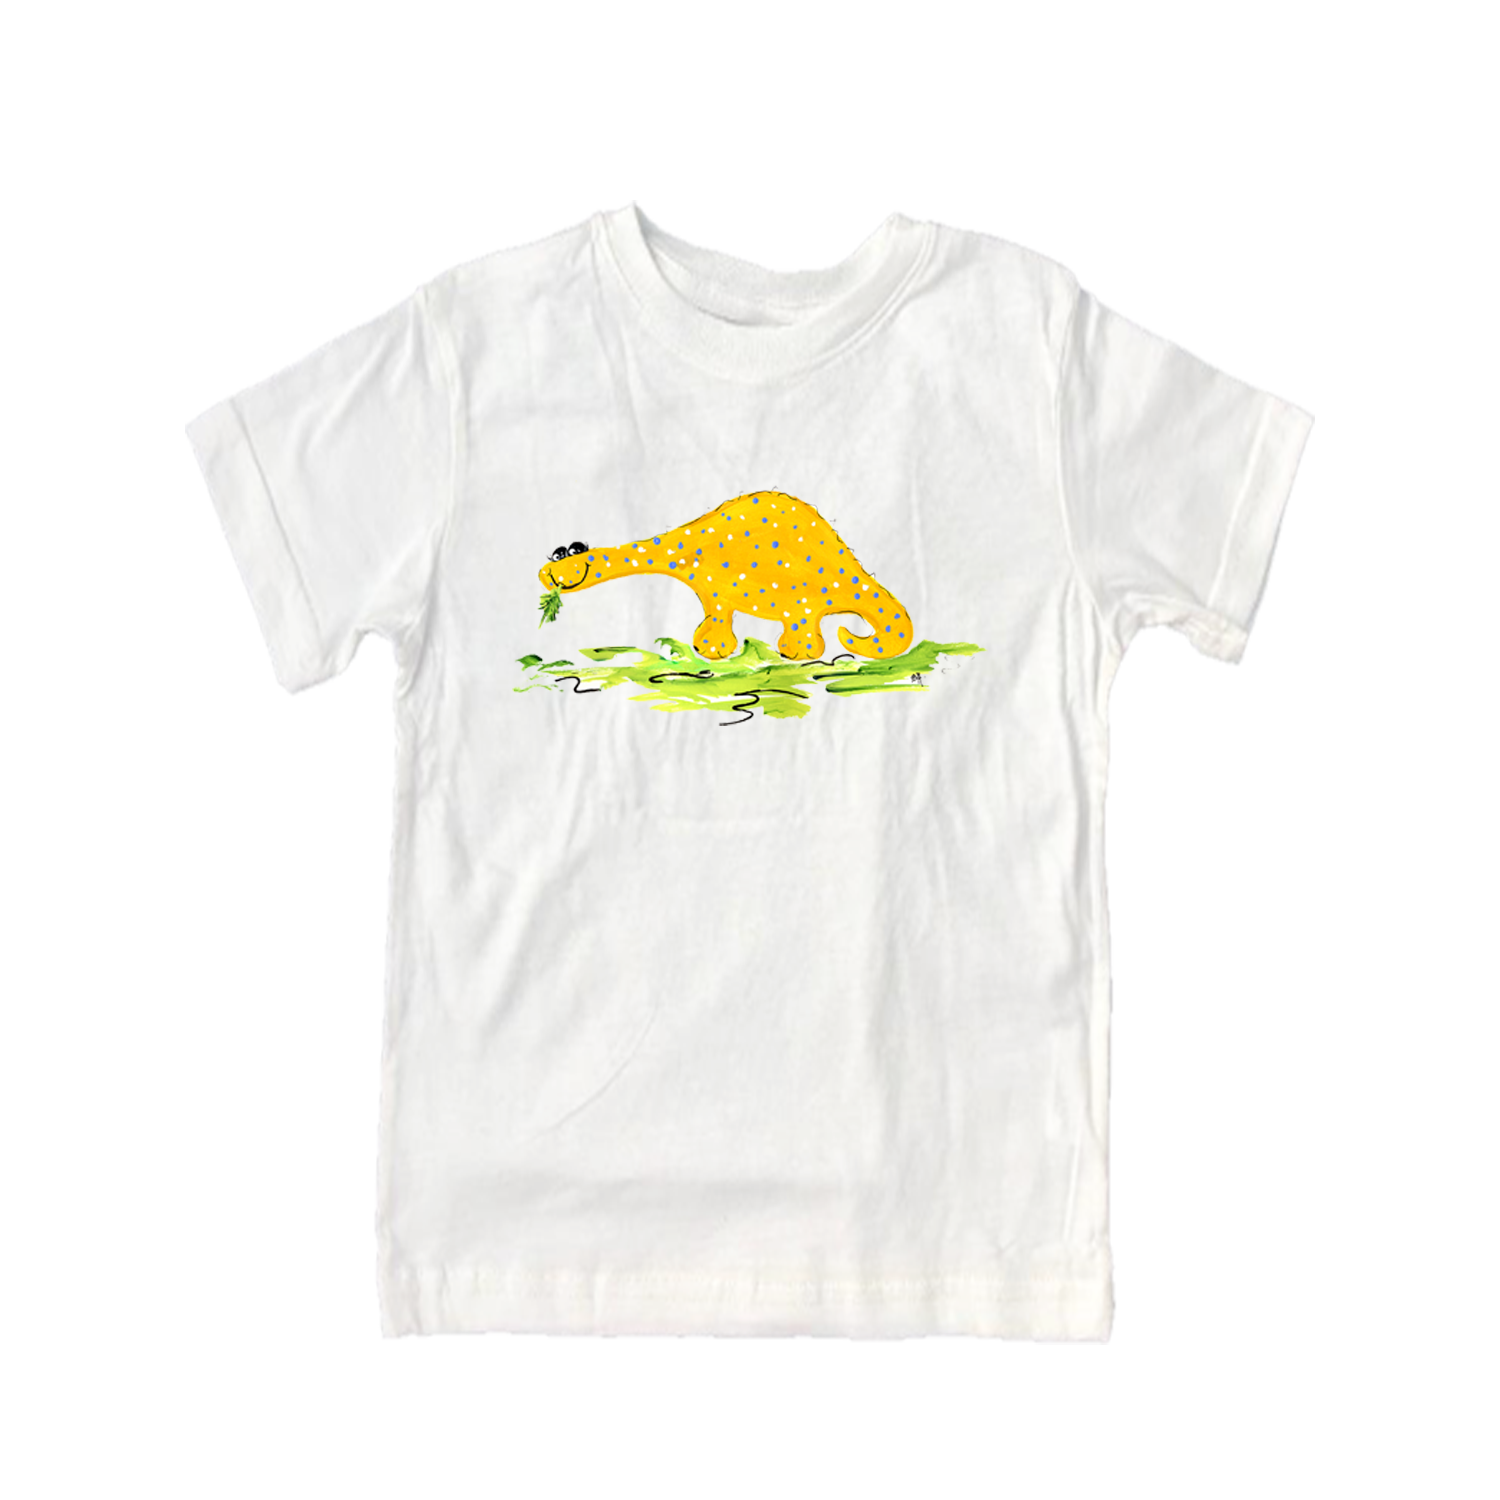 Cotton Tee Shirt Short Sleeve 603 Yellow Dino